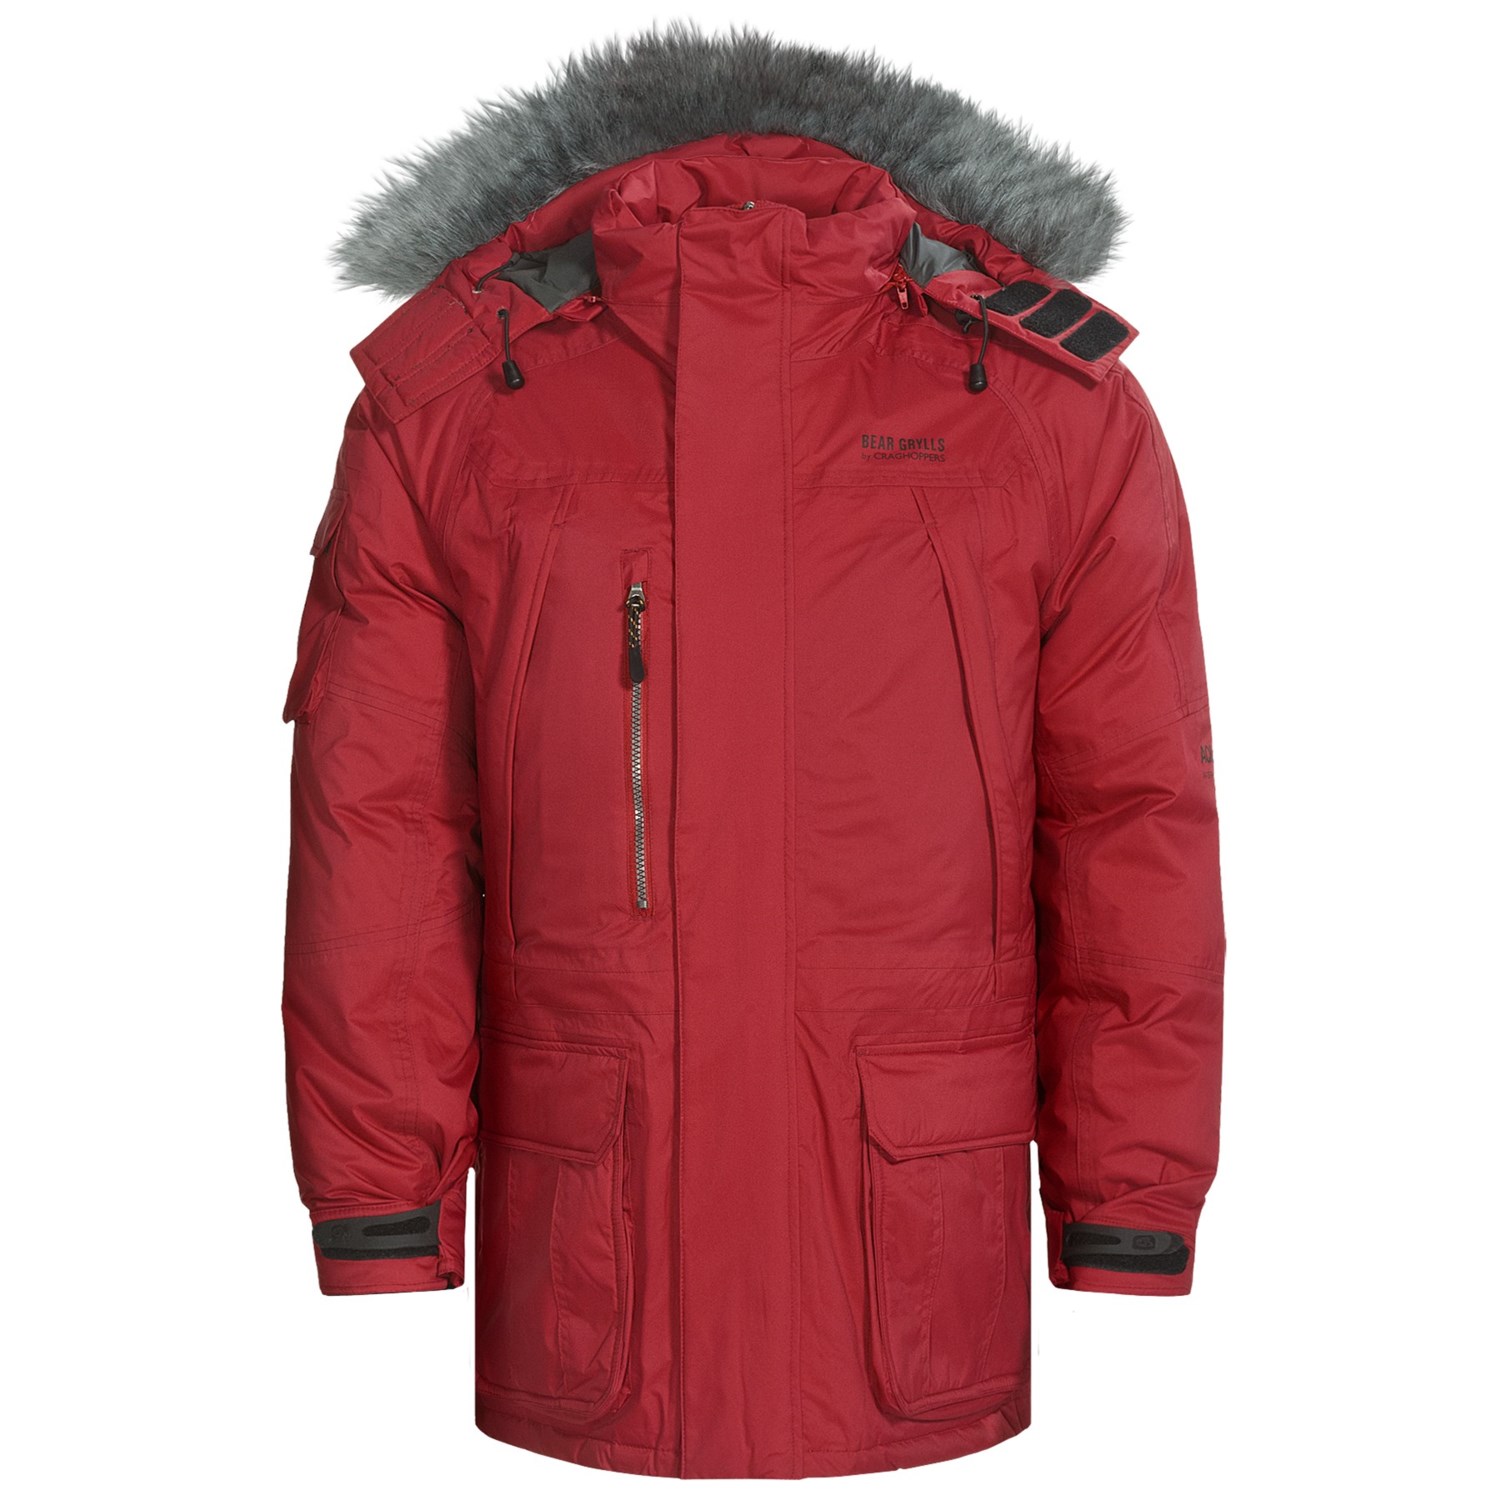 Craghoppers Bear Grylls Polar Down Jacket (For Men) 4667M - Save 35%